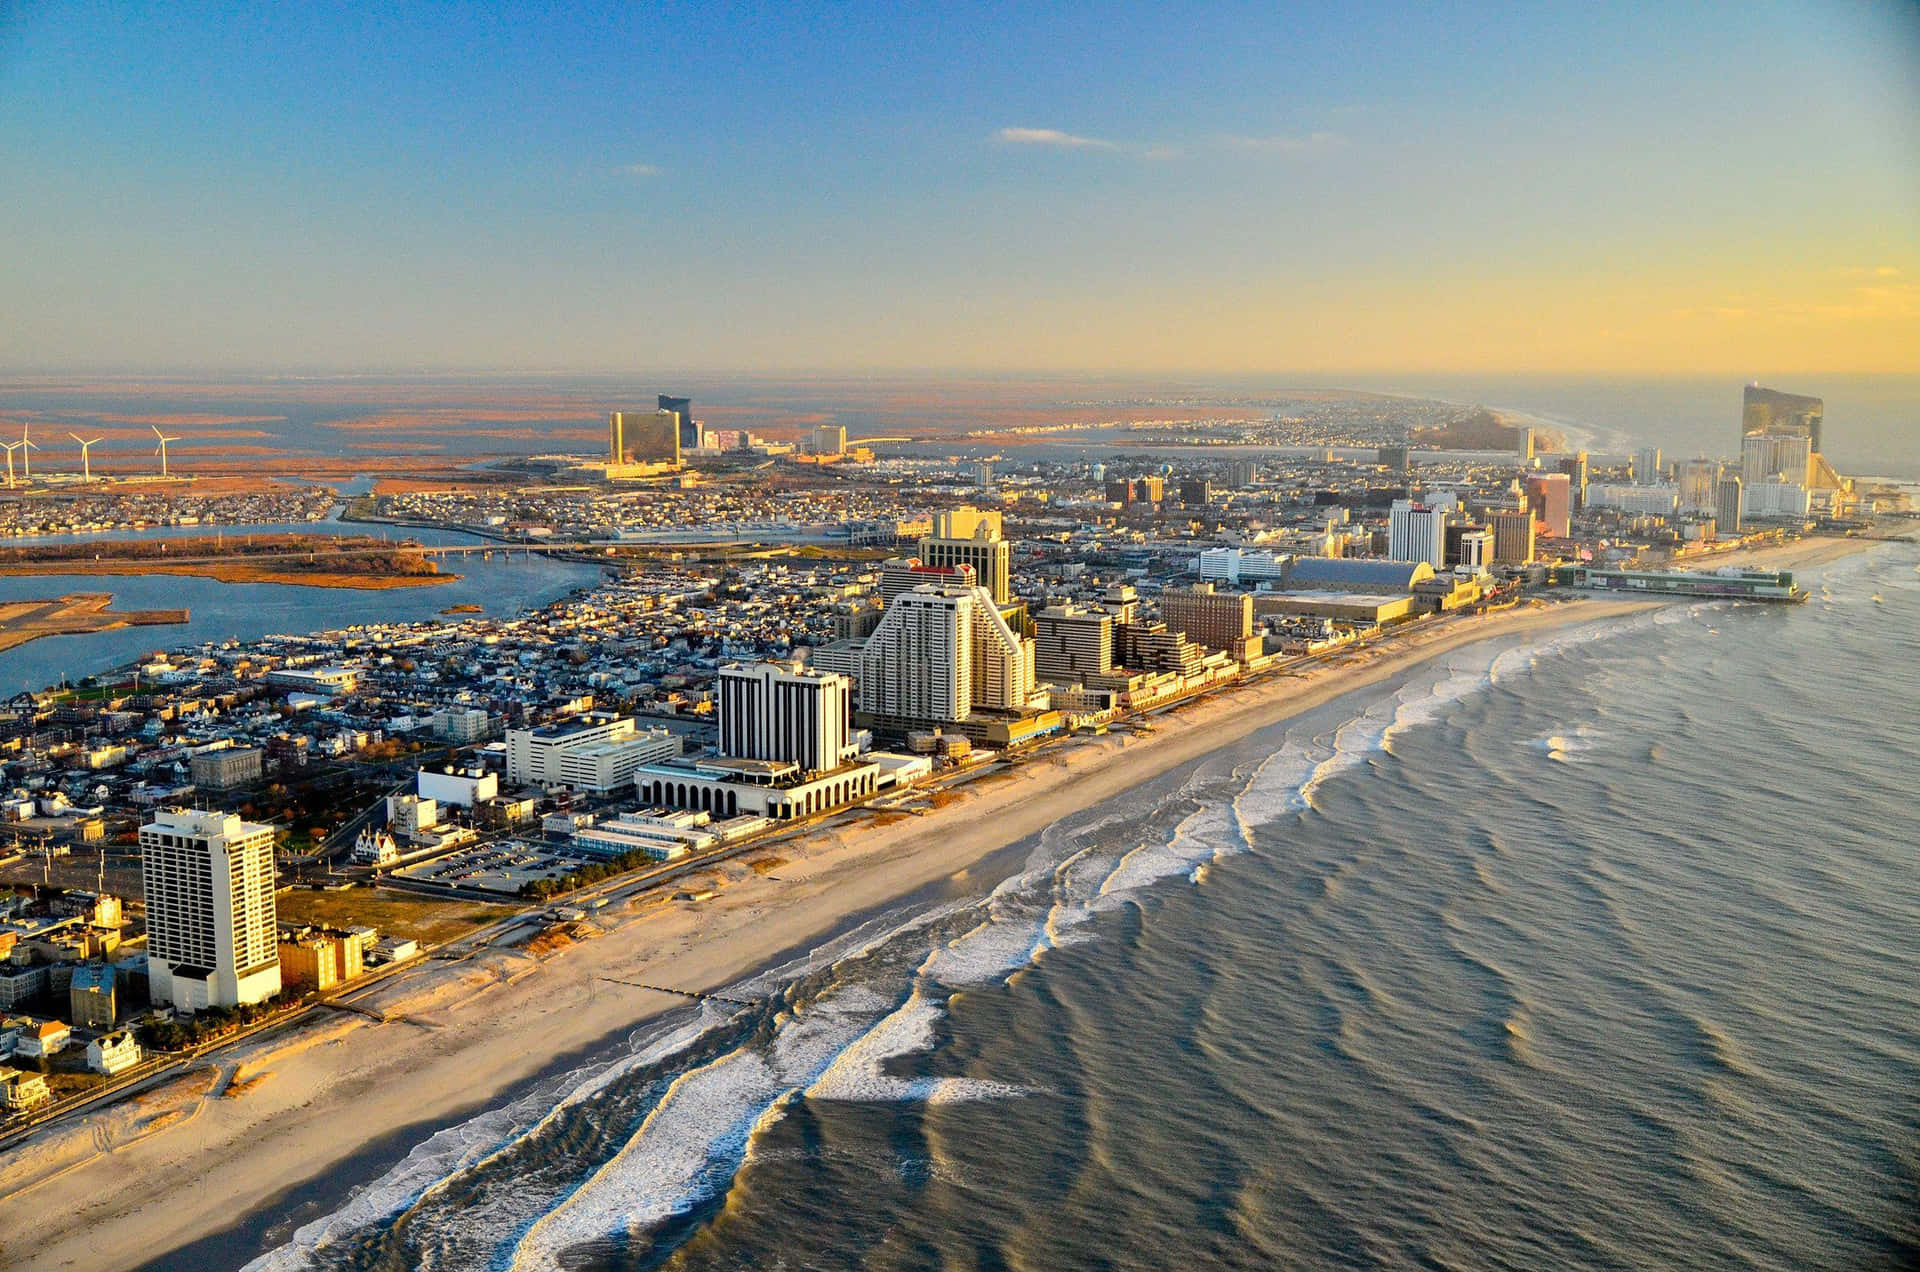 Vistaaerea Di Atlantic City Sull'oceano Immagine